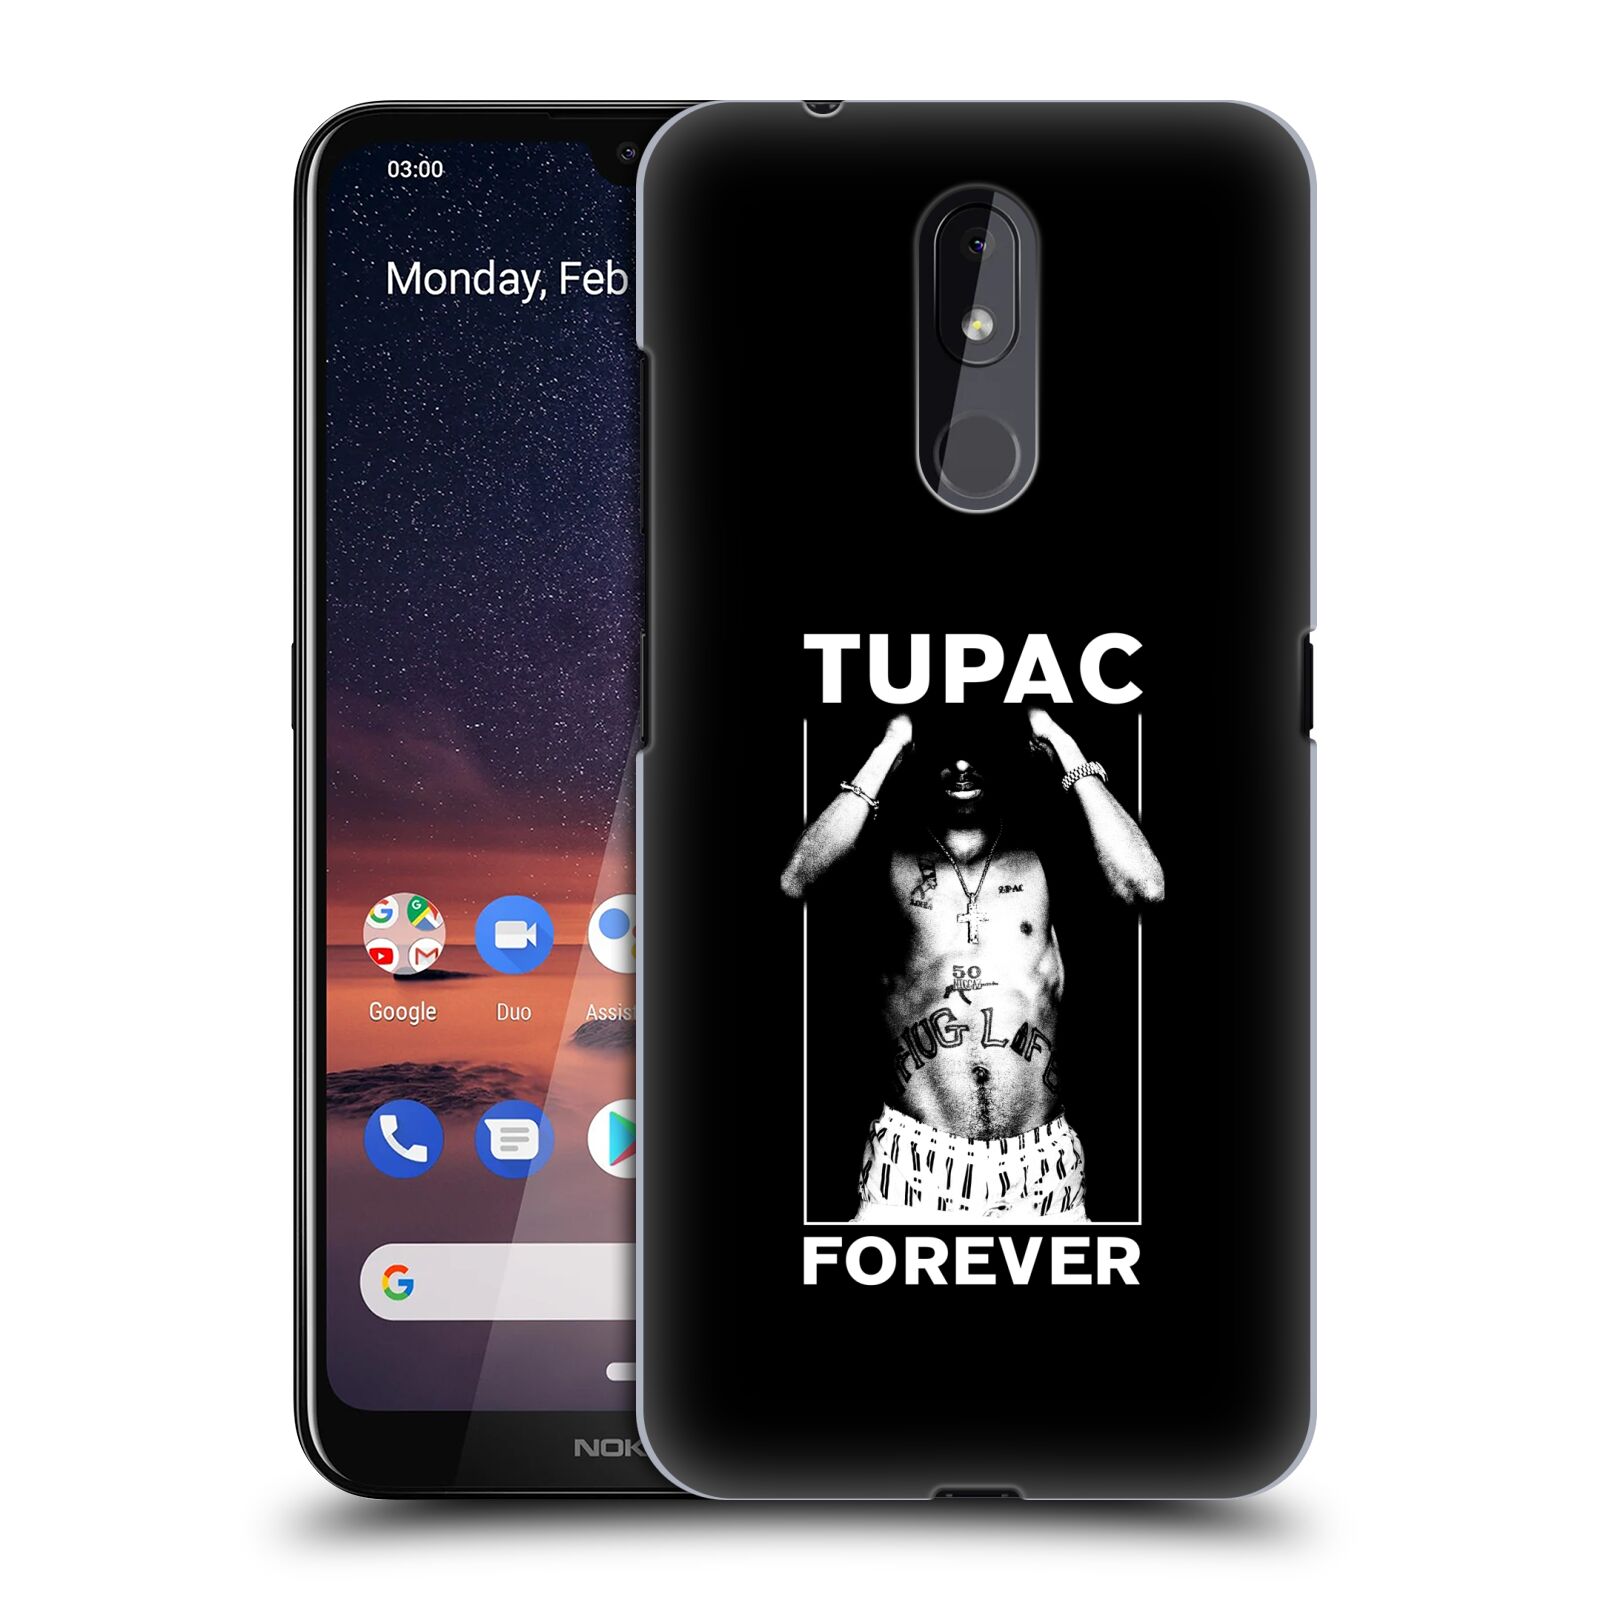 Pouzdro na mobil Nokia 3.2 - HEAD CASE - Zpěvák rapper Tupac Shakur 2Pac bílý popisek FOREVER